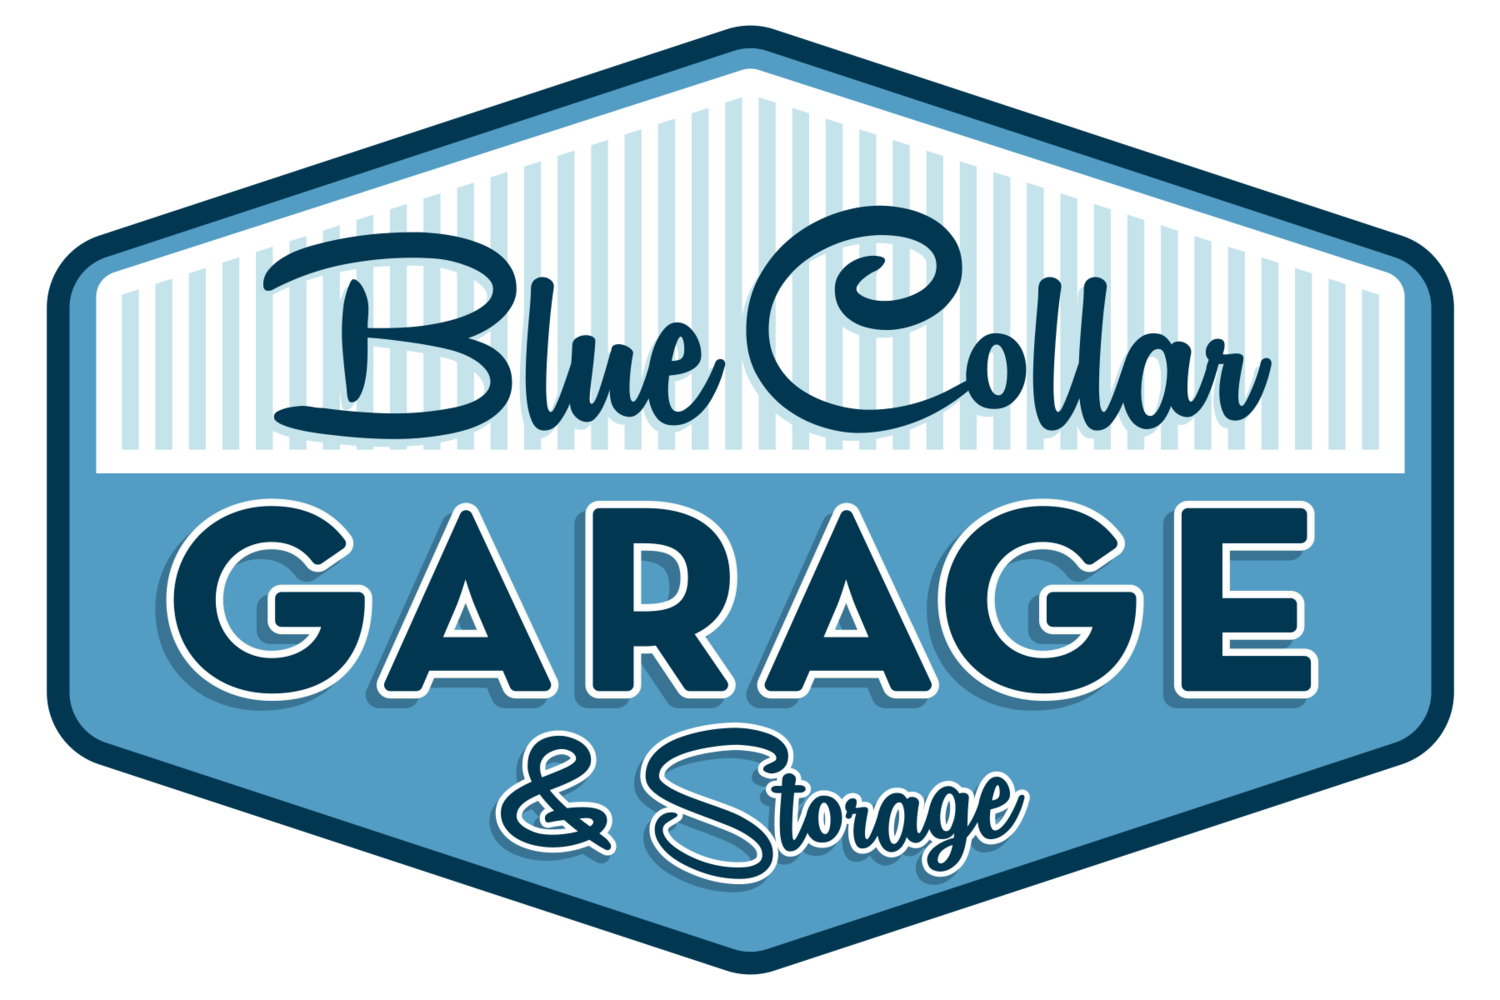 The Blue Collar Garage and Storage